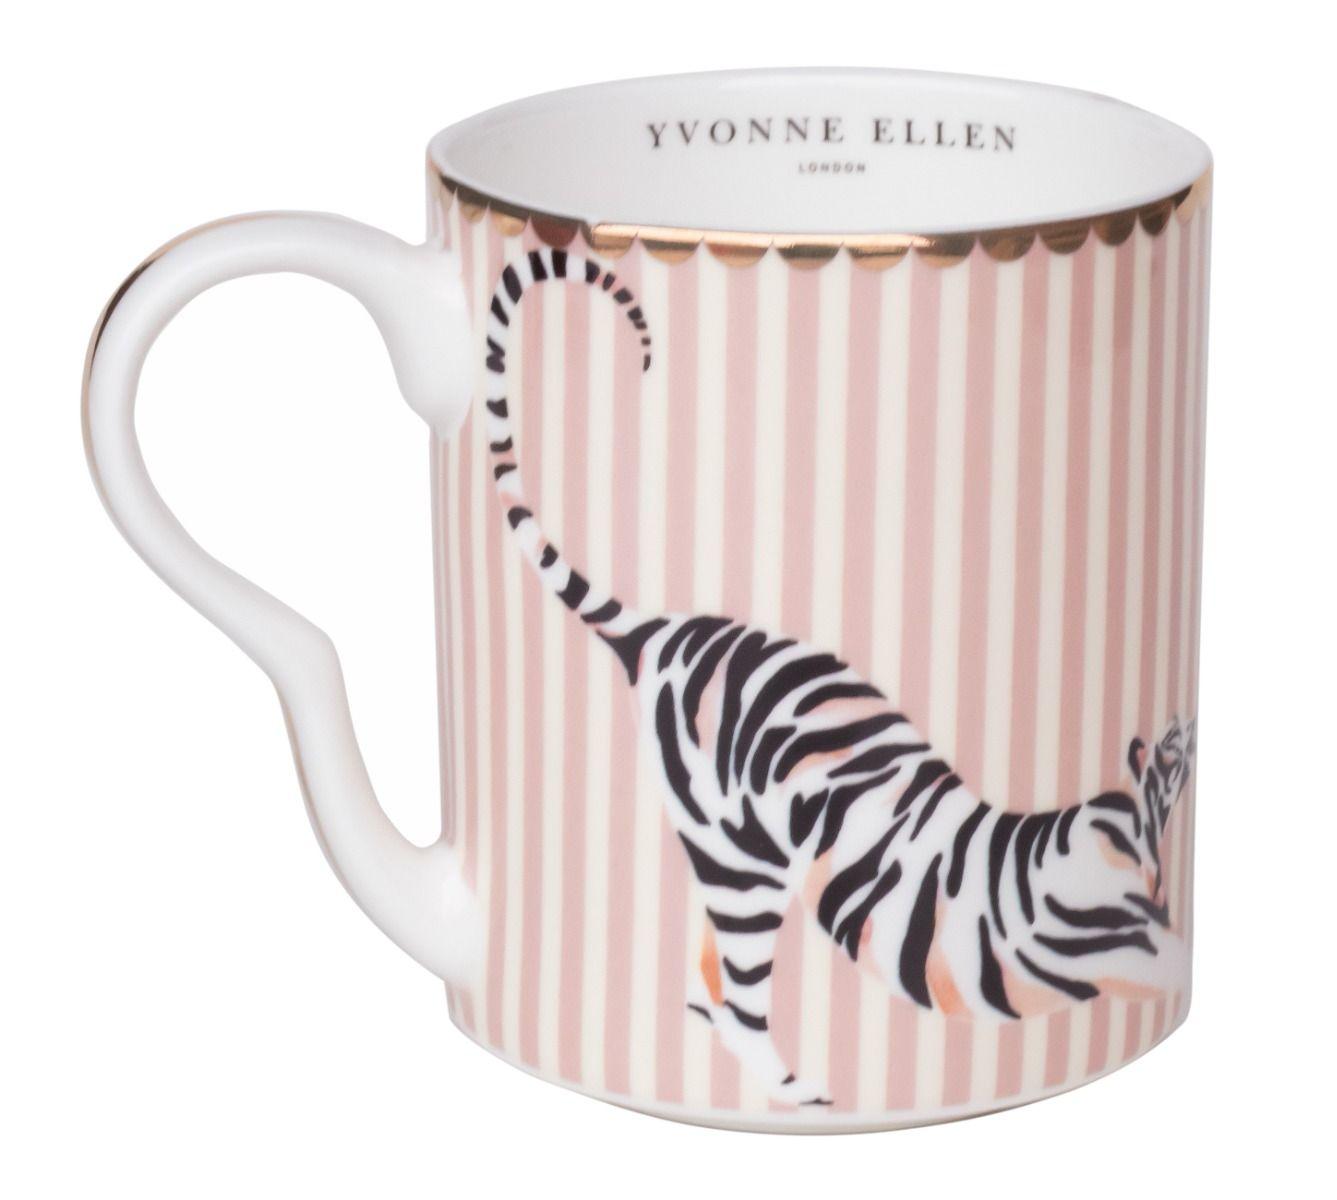 Yvonne Ellen Small Mug - Assorted - Set of 3 Tableware Foxyavenue UK